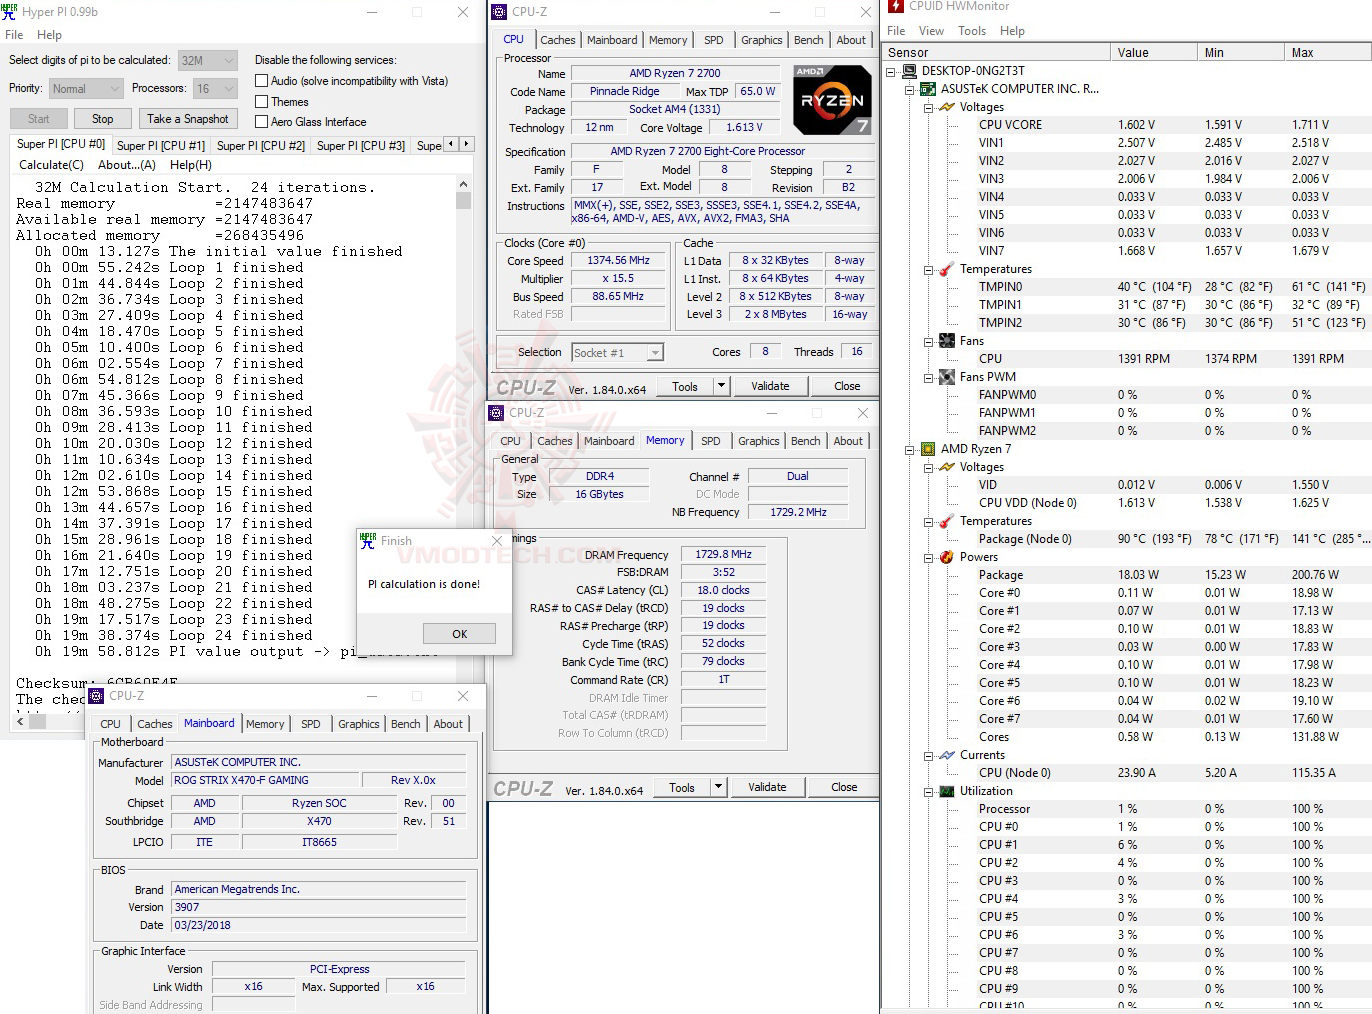 h32 1 oc AMD RYZEN 7 2700 PROCESSOR REVIEW 